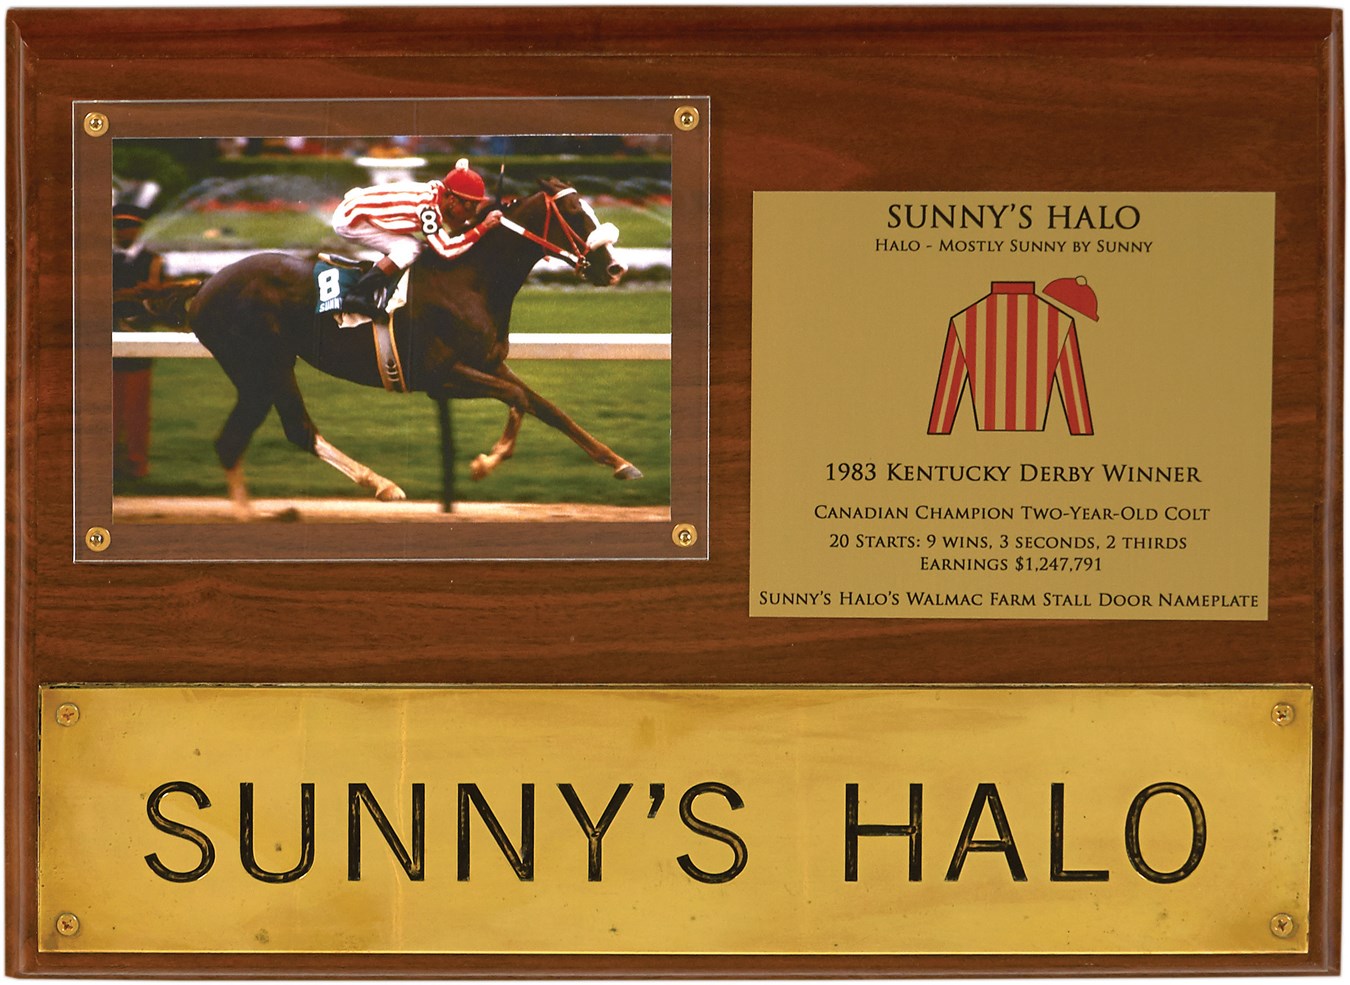 Sunny's Halo Walmac Farm Stall Door Nameplate